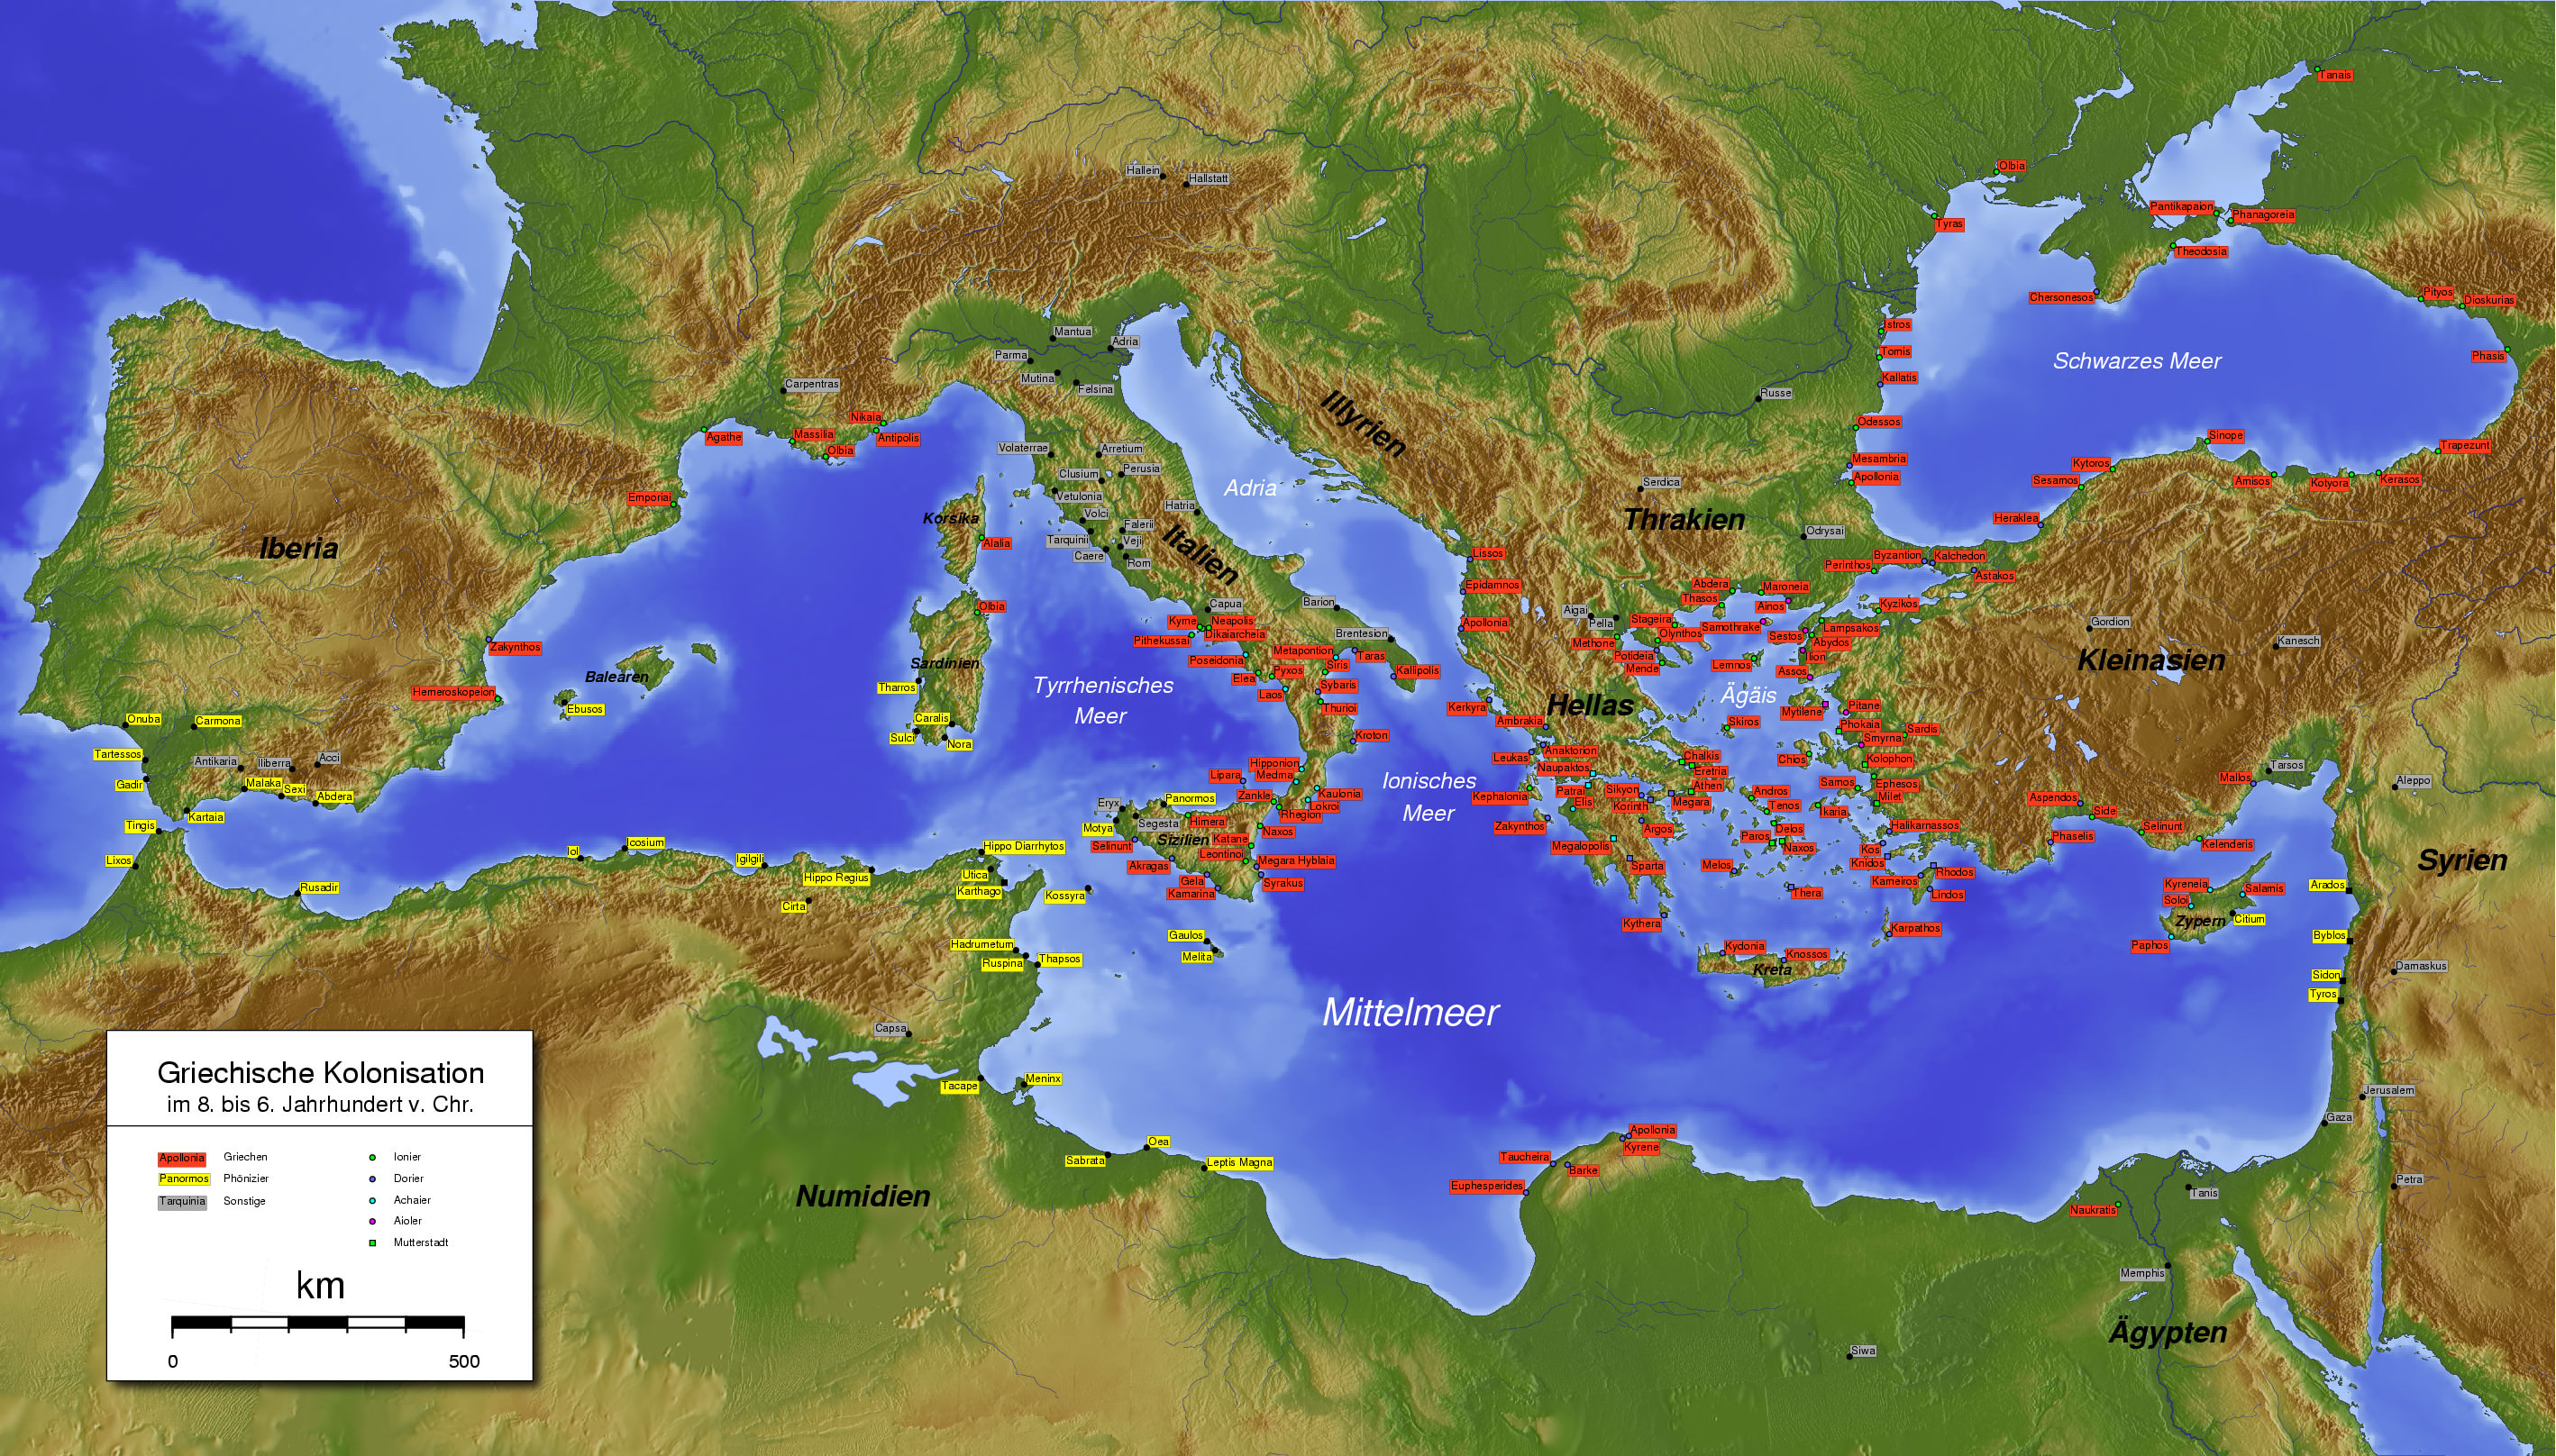 The Greeks Colonize the Mediterranean